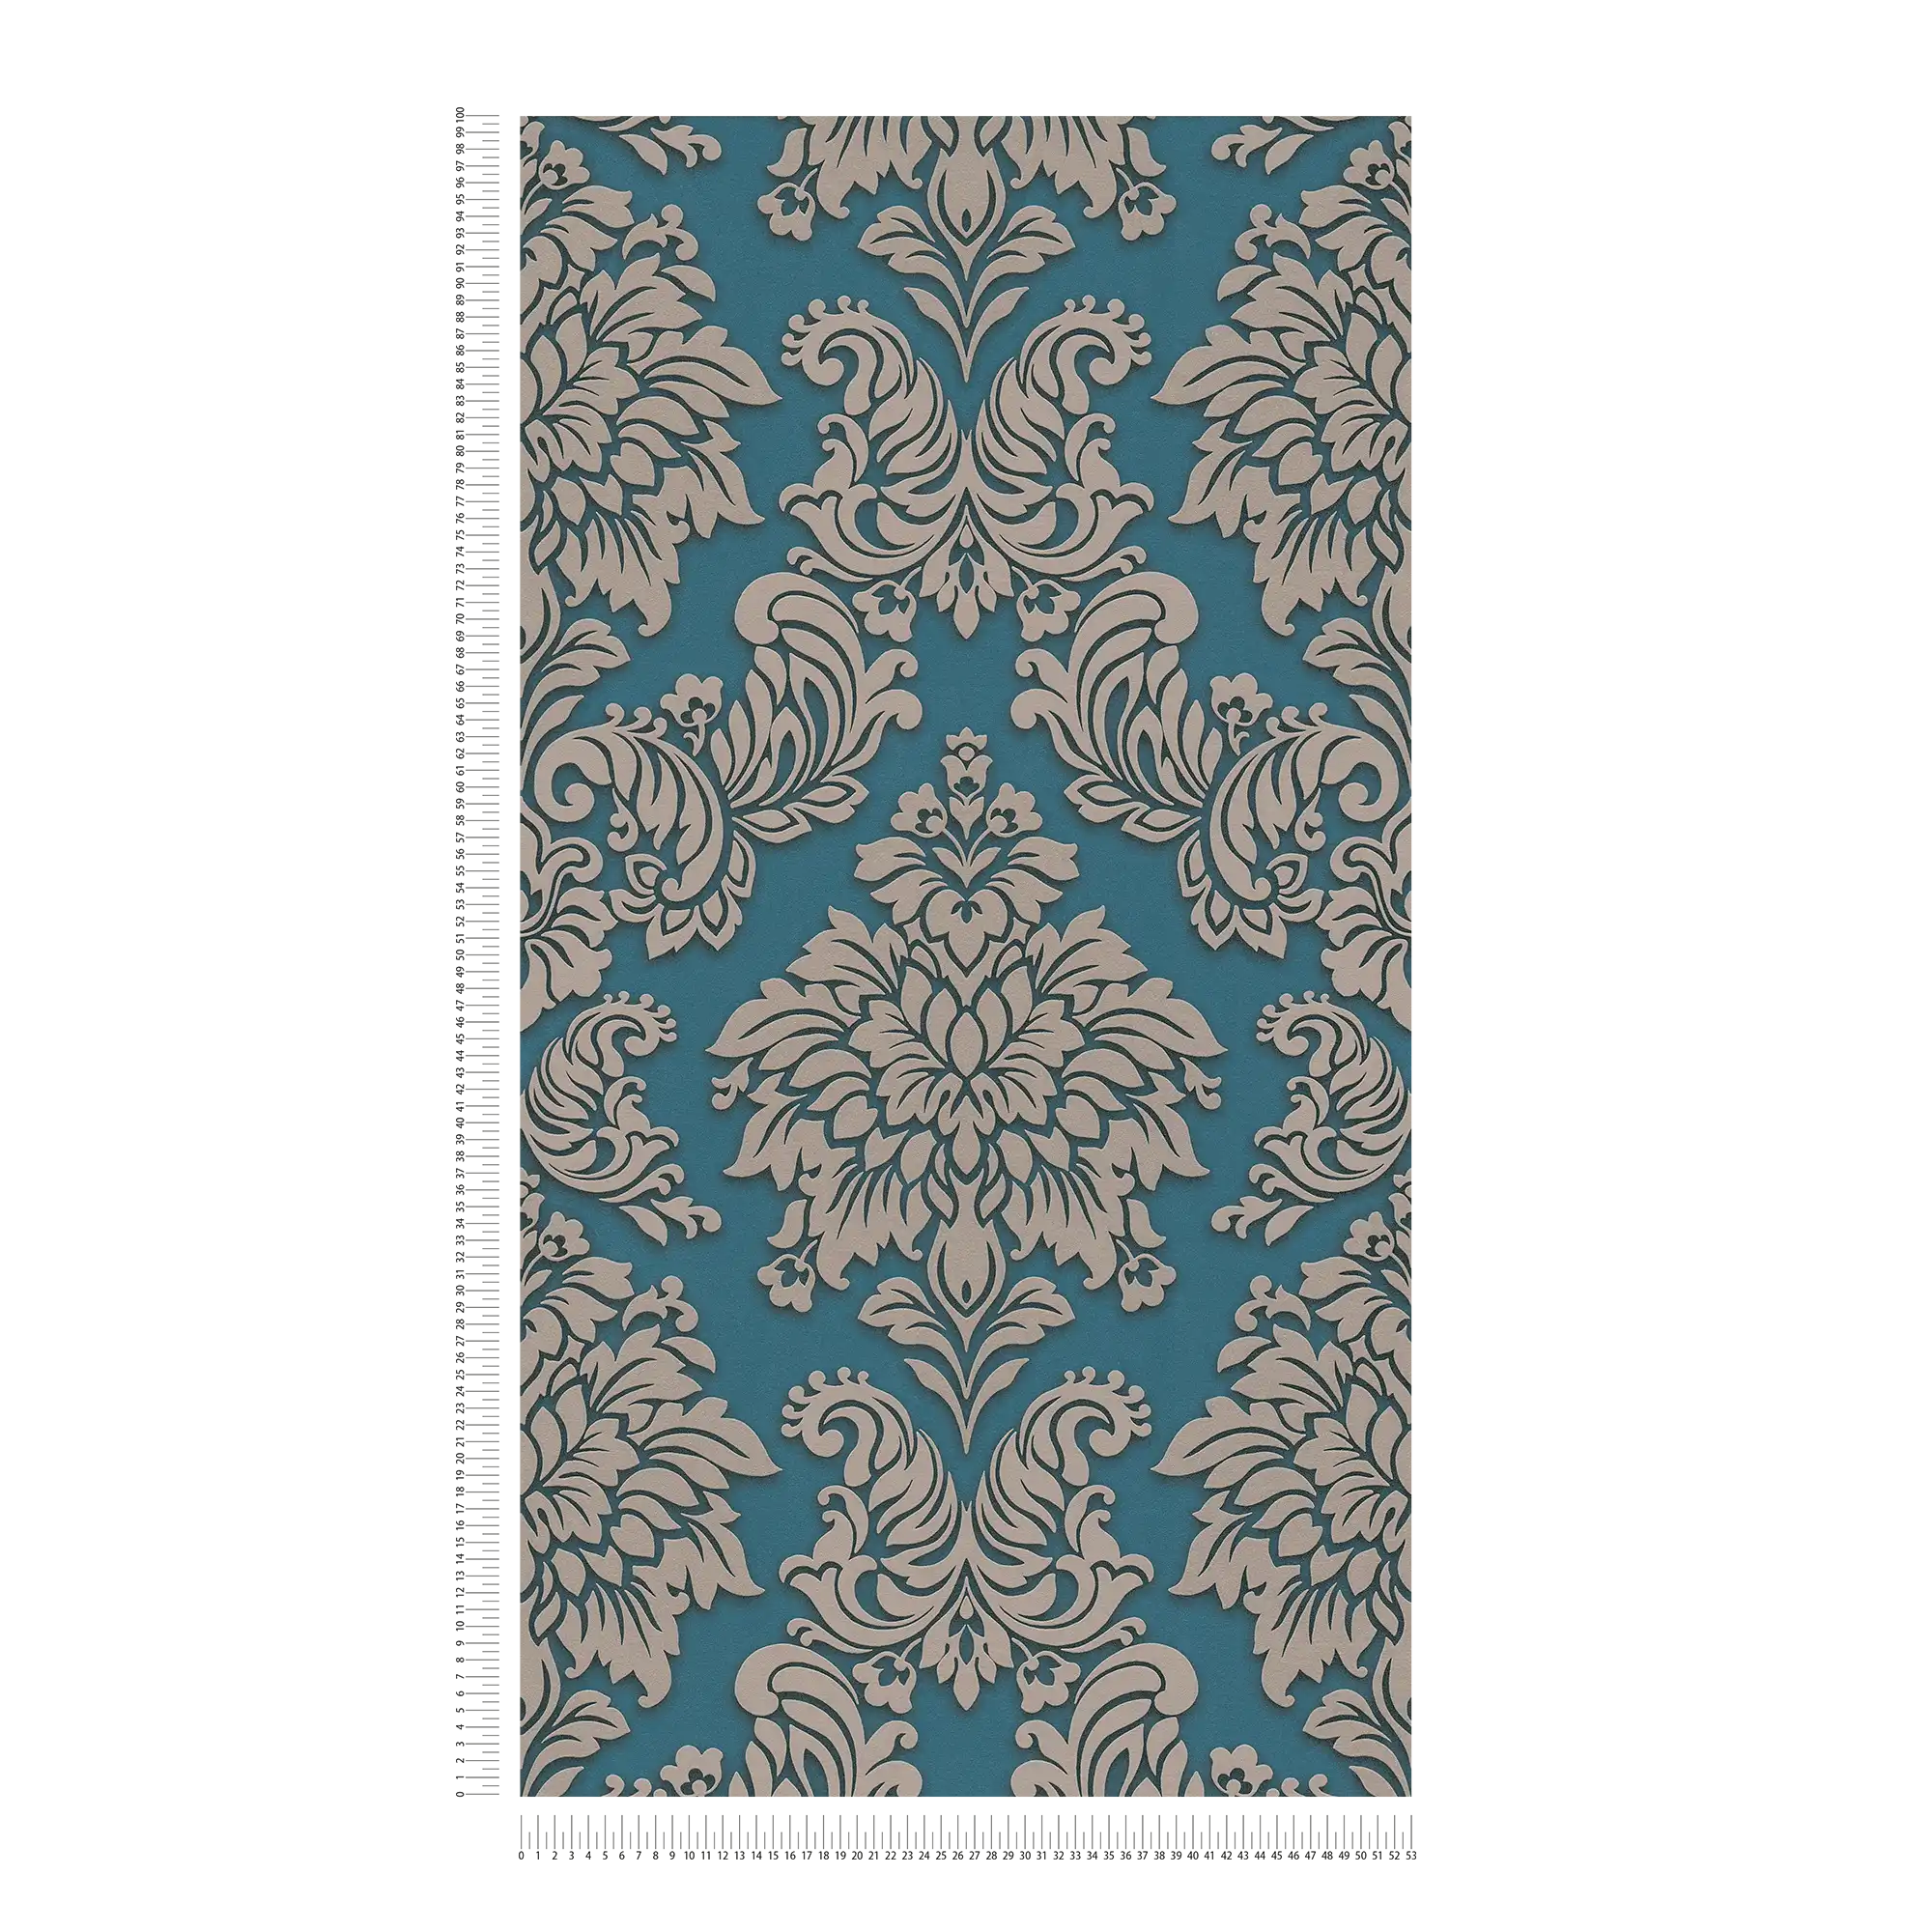             Barock Tapete Ornamente mit Glitzereffekt – Blau, Silber, Beige
        